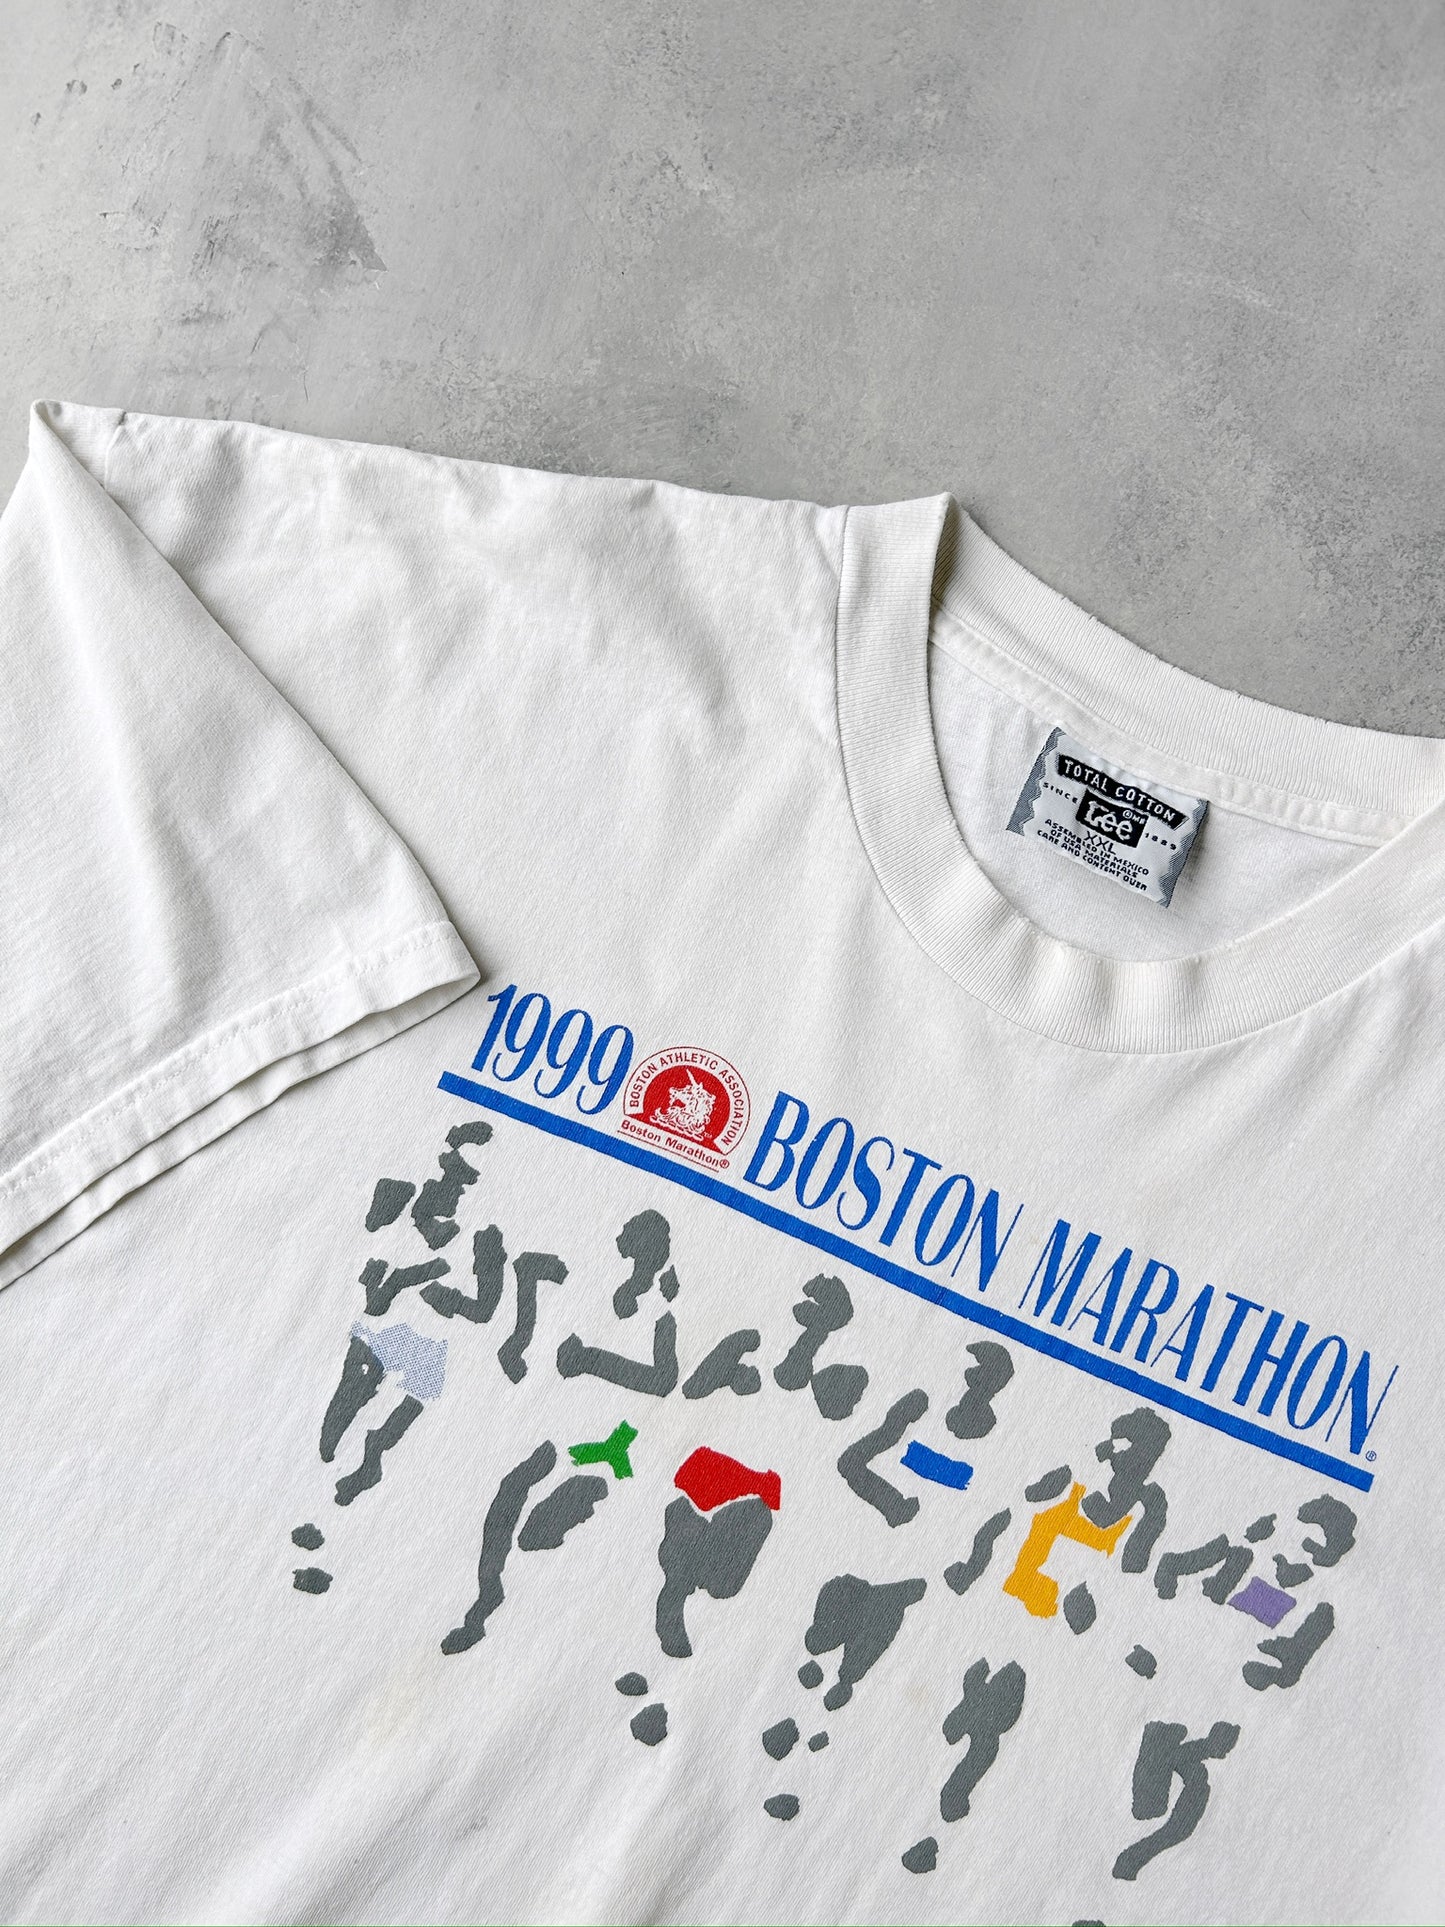 Boston Marathon T-Shirt '99 - XXL